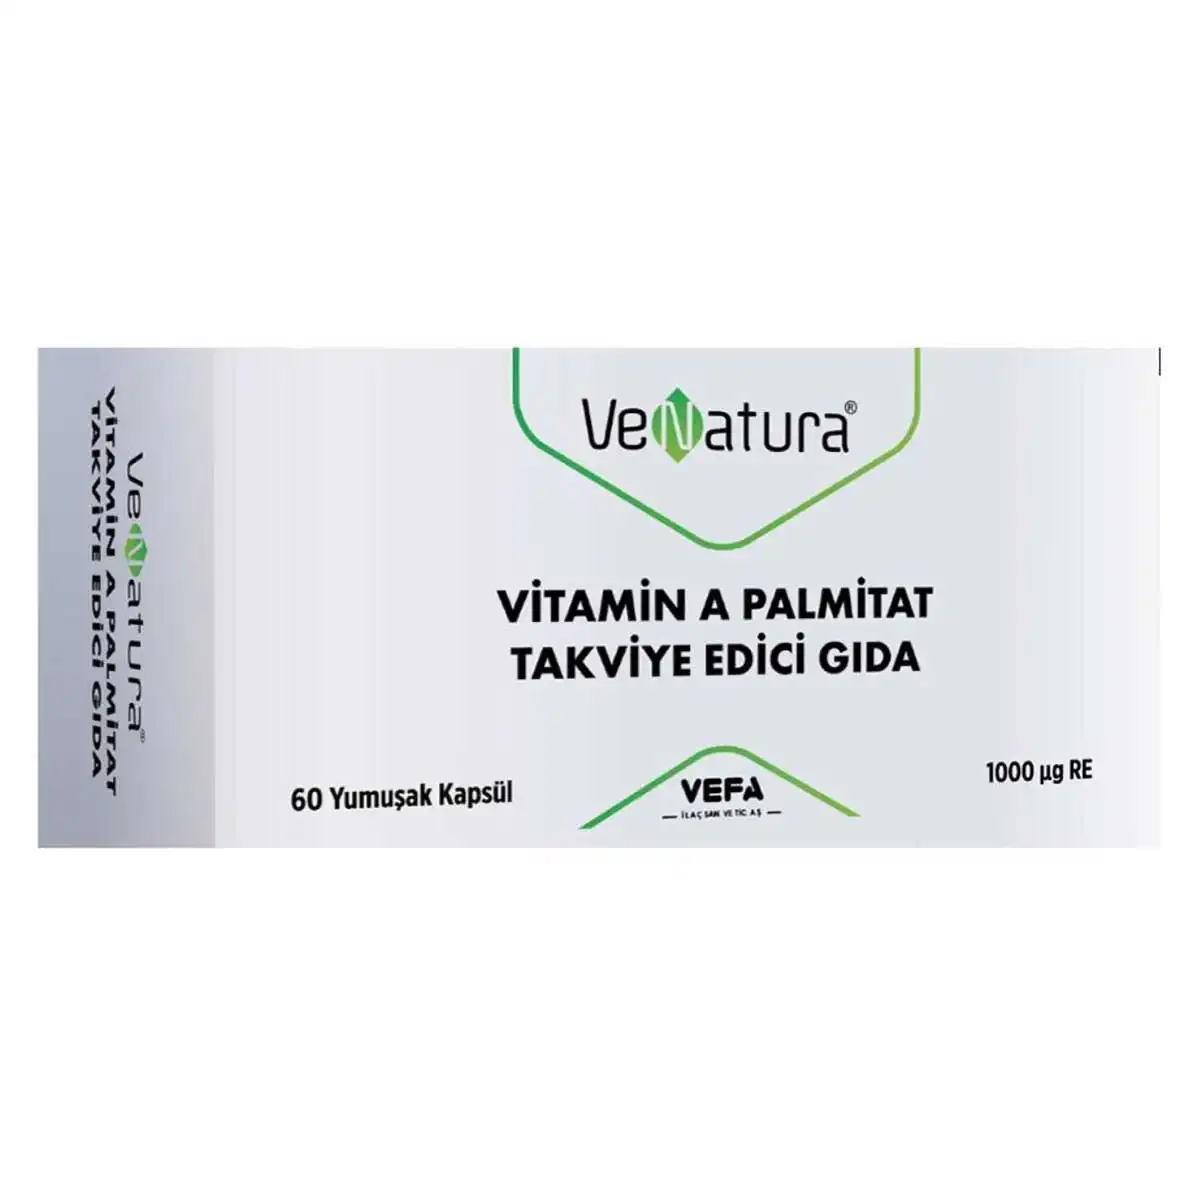 En İyi A Vitamini Takviyeleri Venatura Palmitat A Vitamini Takviyesi